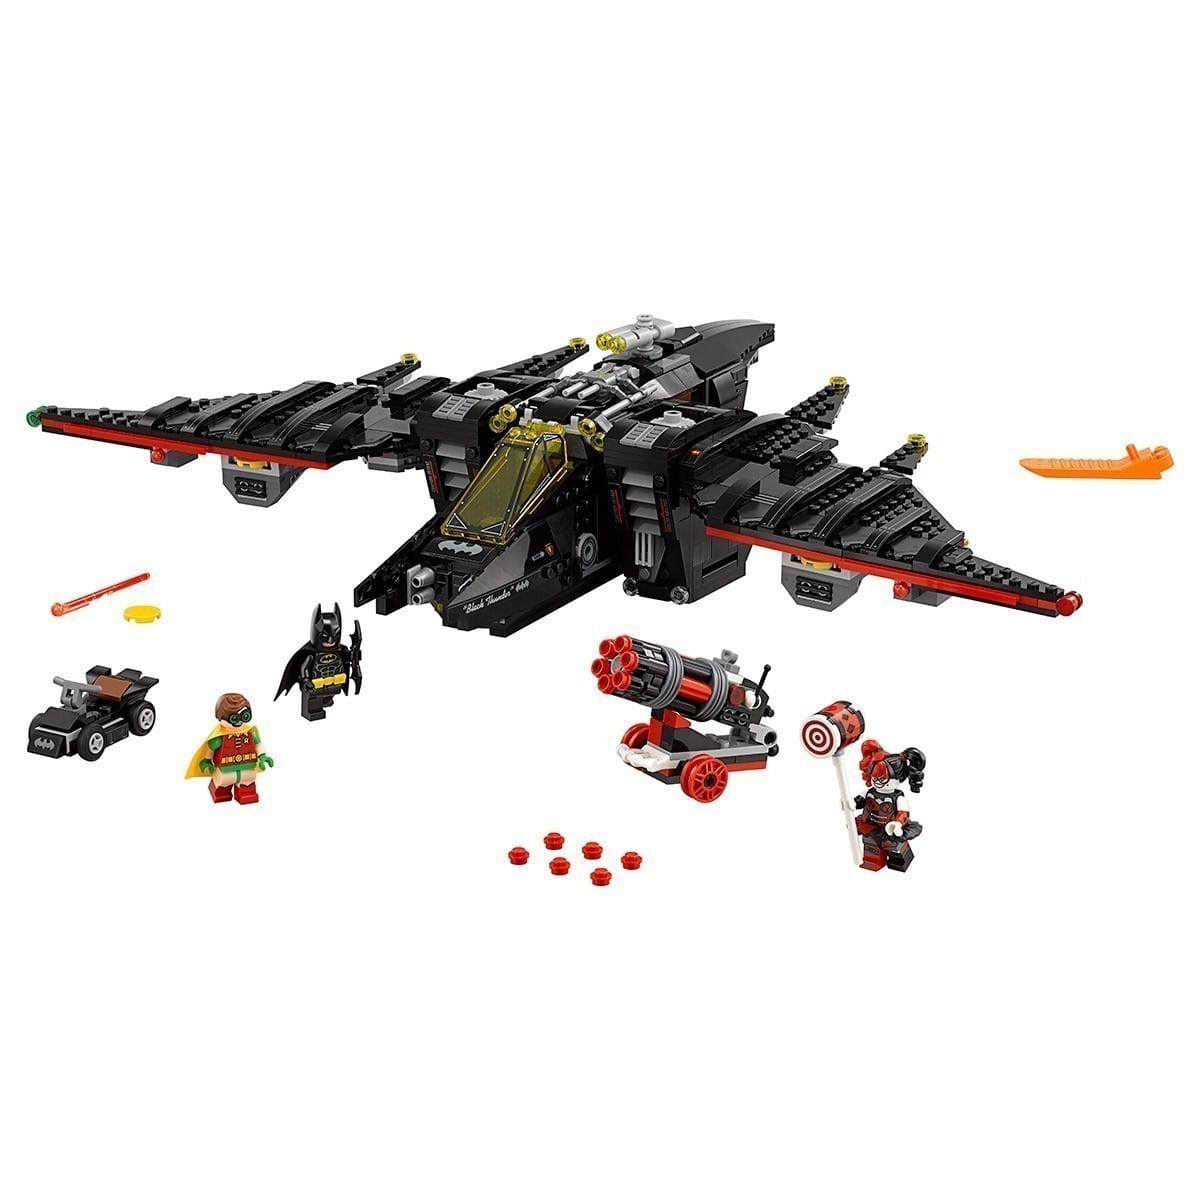 LEGO - The Batman Movie - 70916 The Batwing